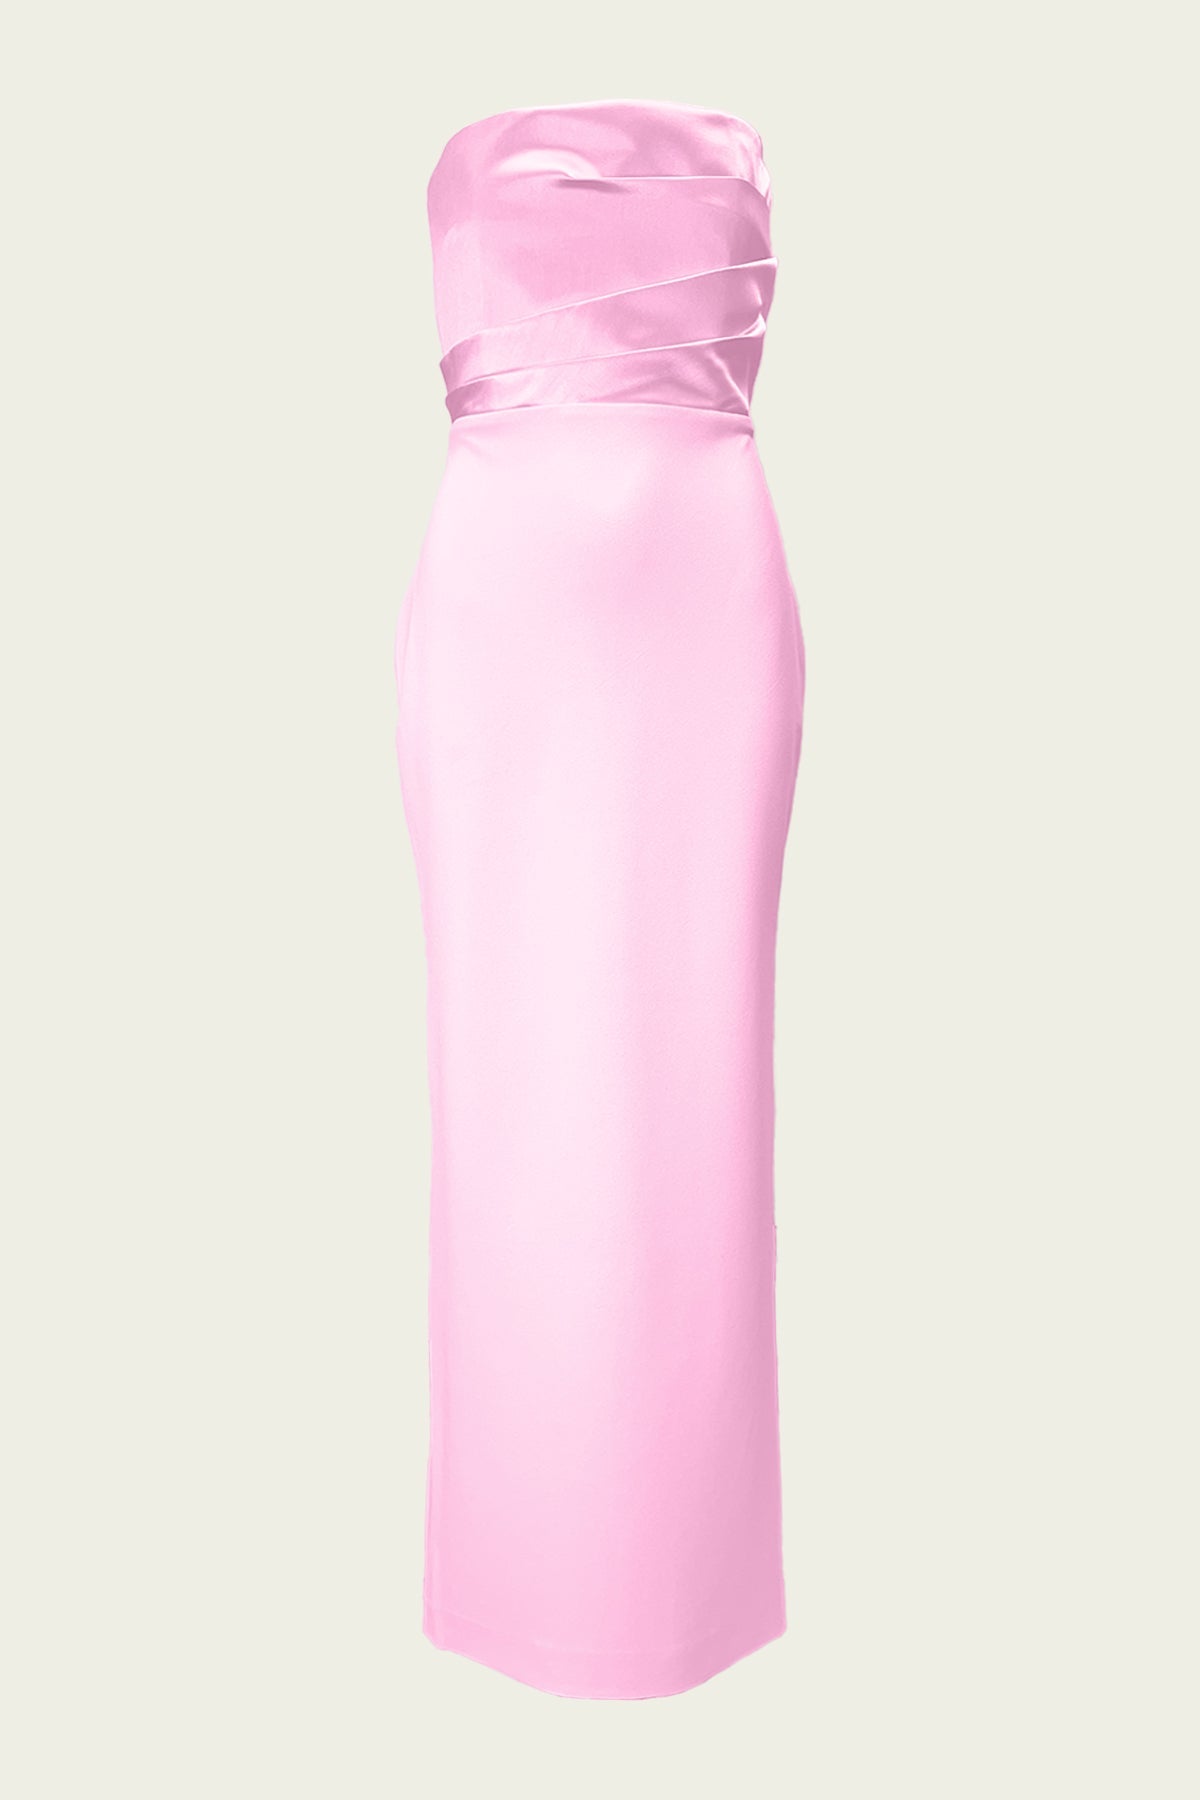 Solace London The Irma maxi dress - Pink